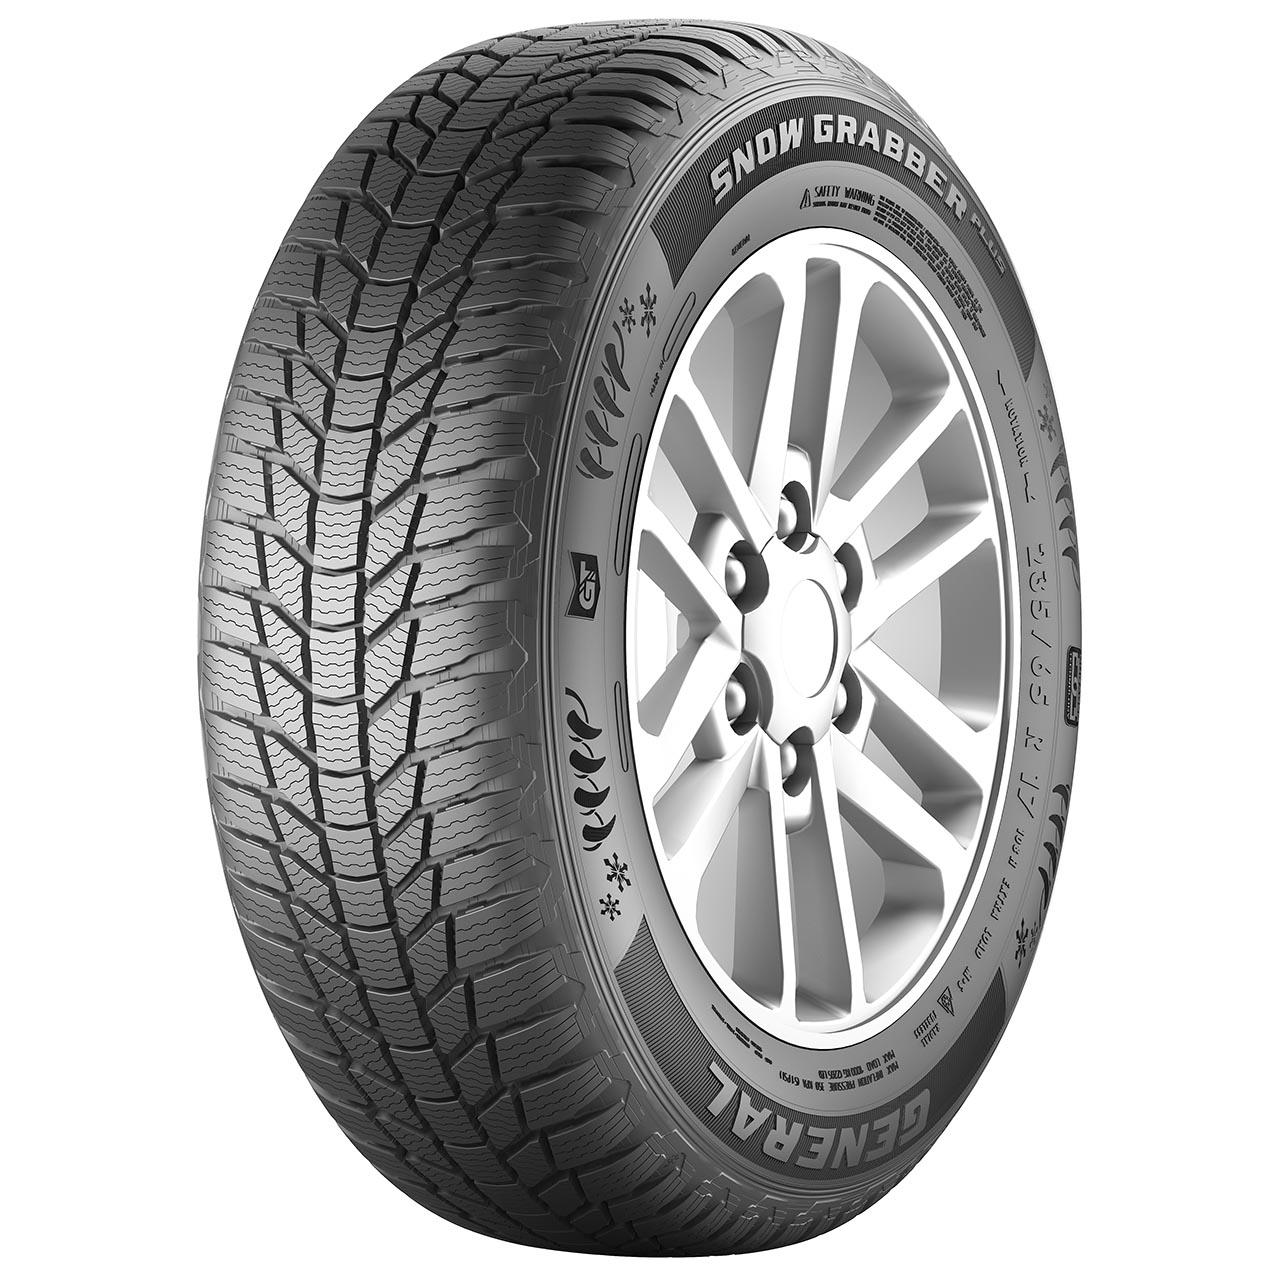 General Tire Snow Grabber Plus 235/60R17 106H XL FR